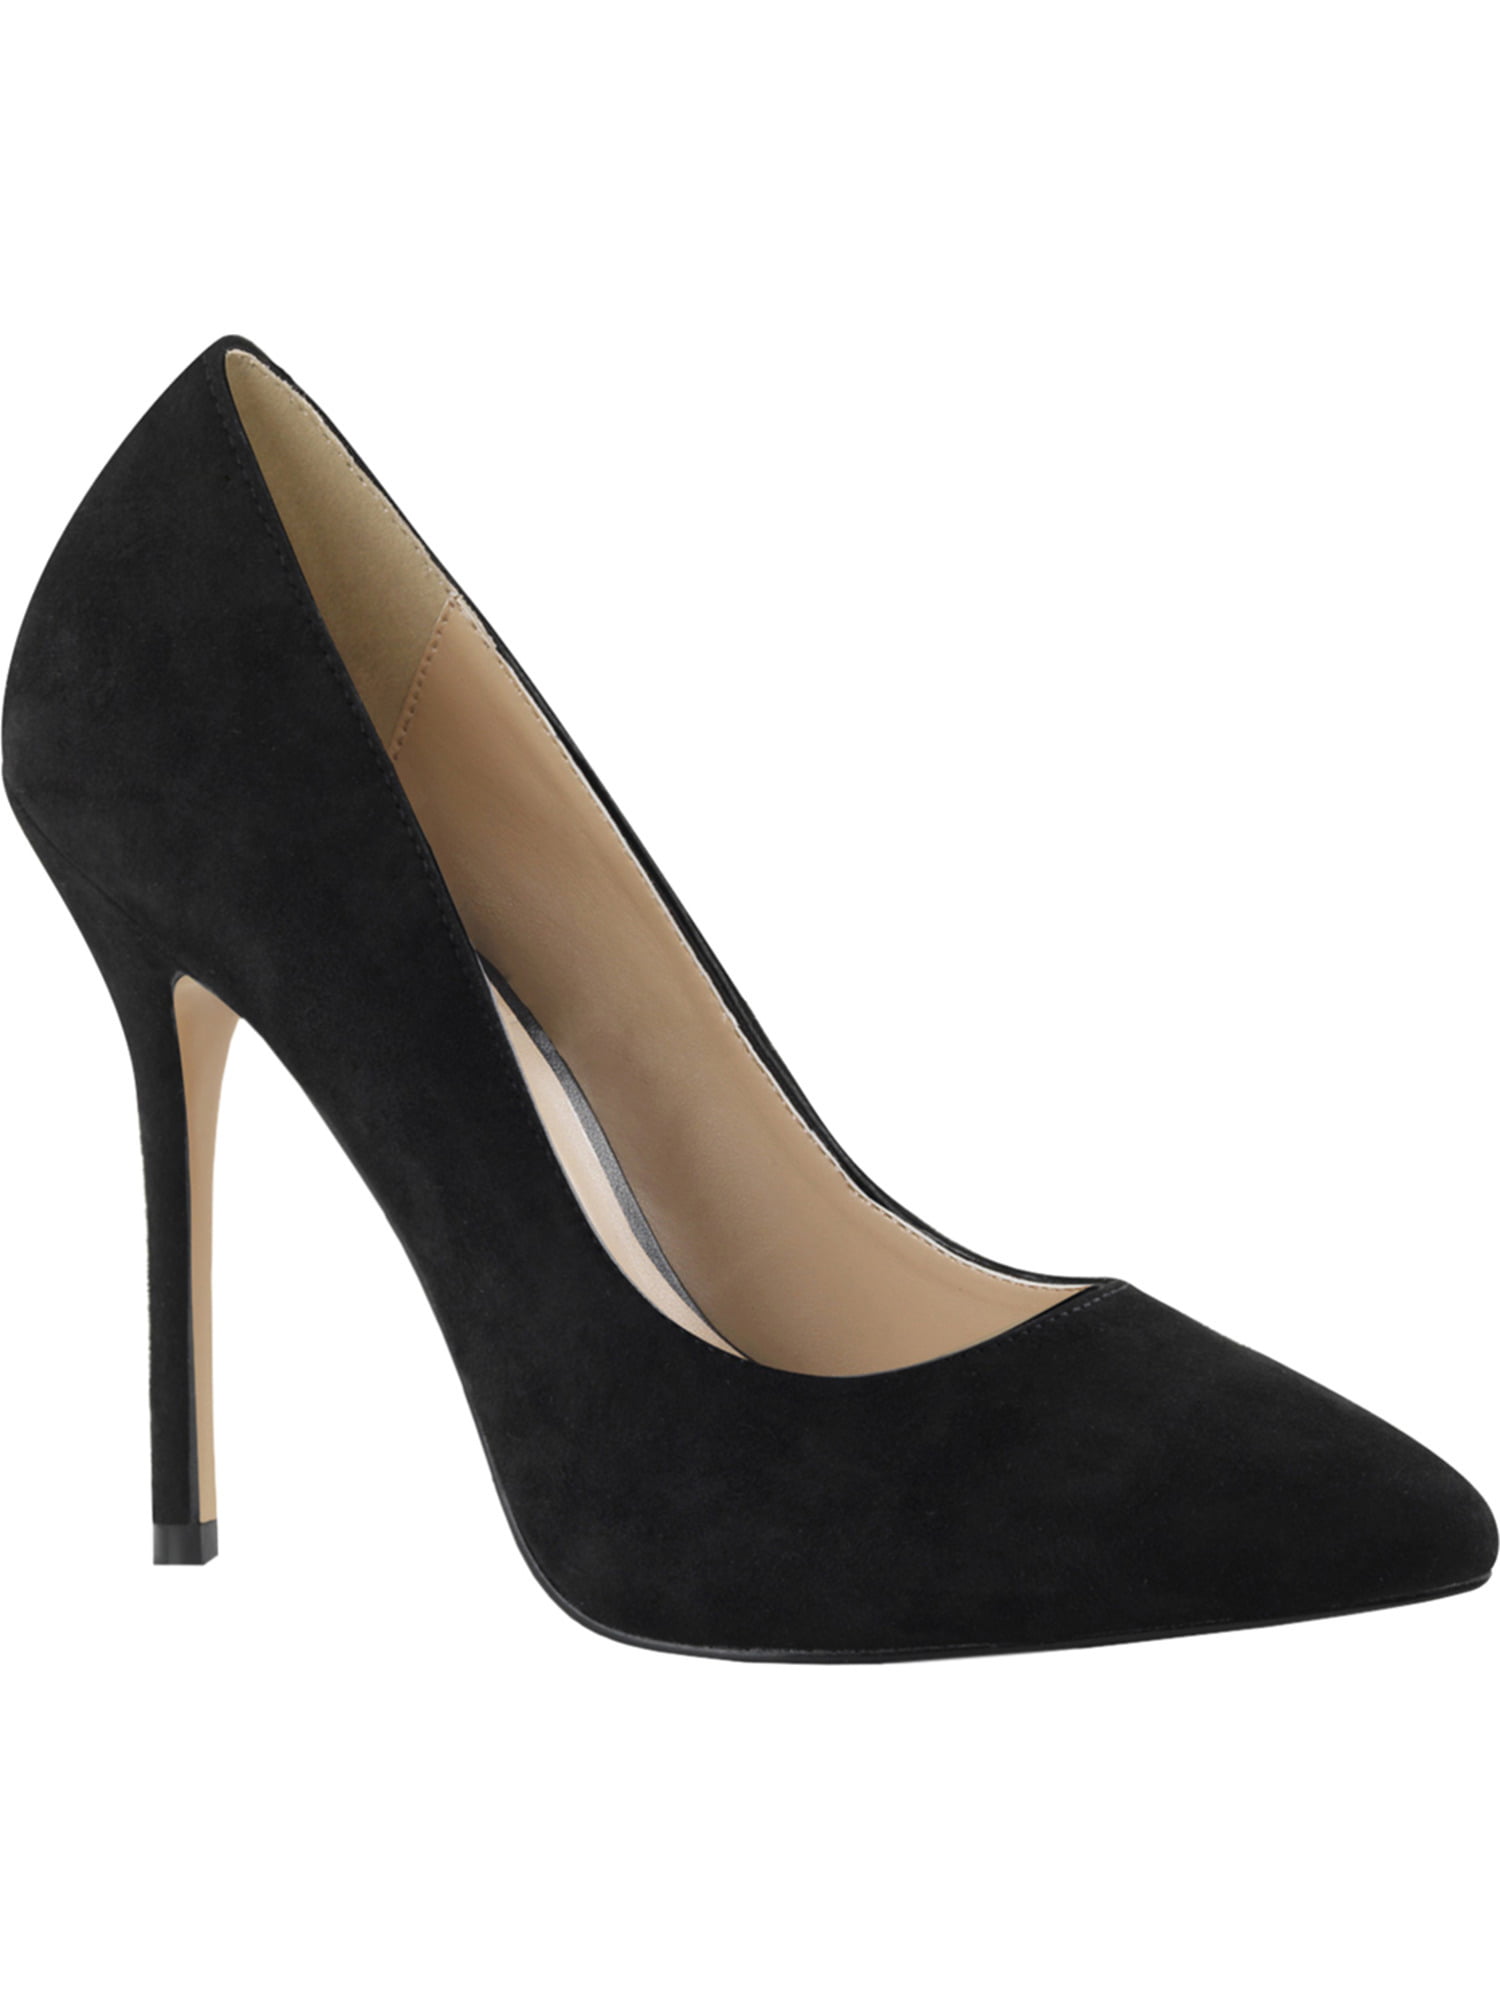 black suede pumps 3 inch heel